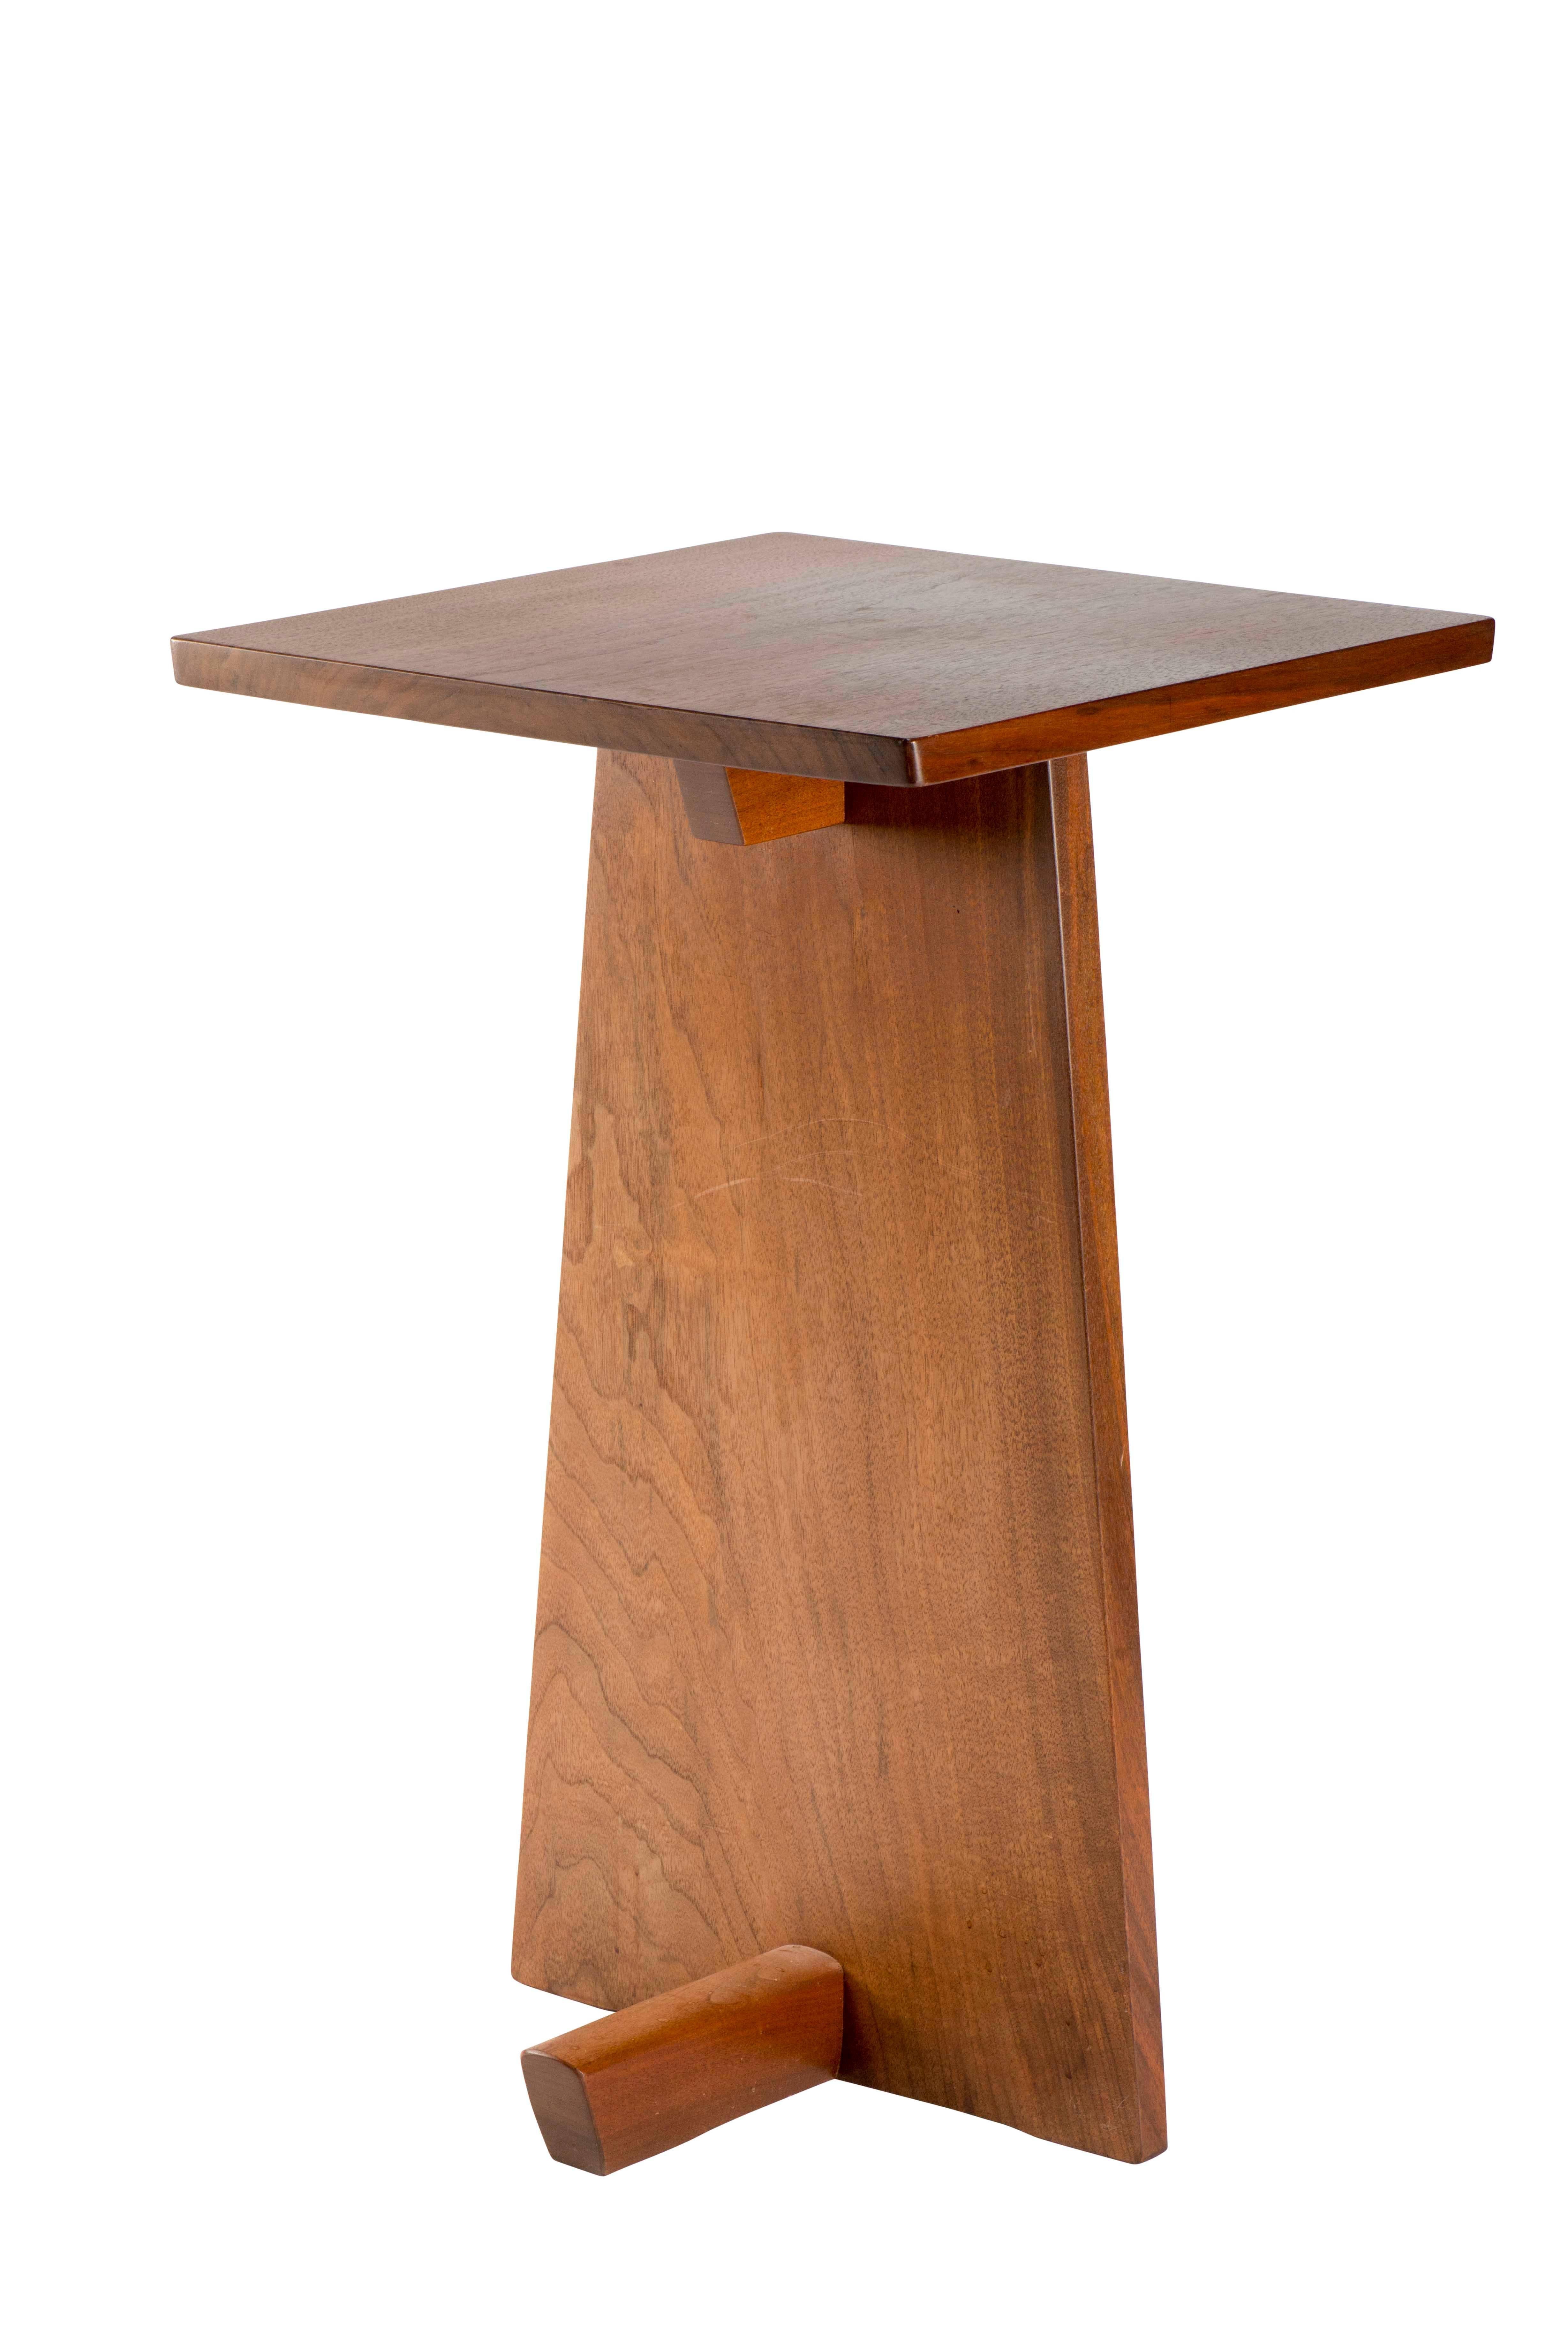 A wonderful George Nakashima pedestal table (32.25